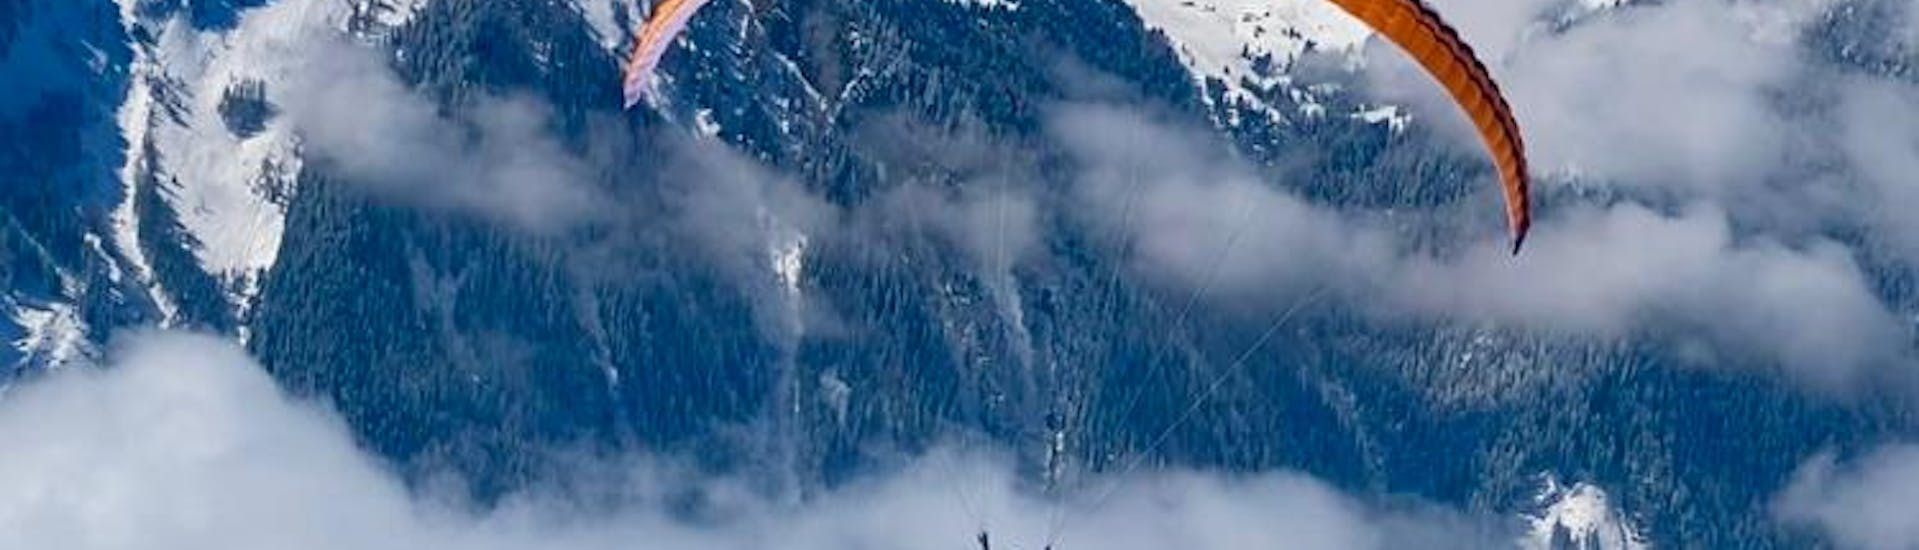 Vol en parapente à haute altitude à Mayrhofen - Innsbruck.